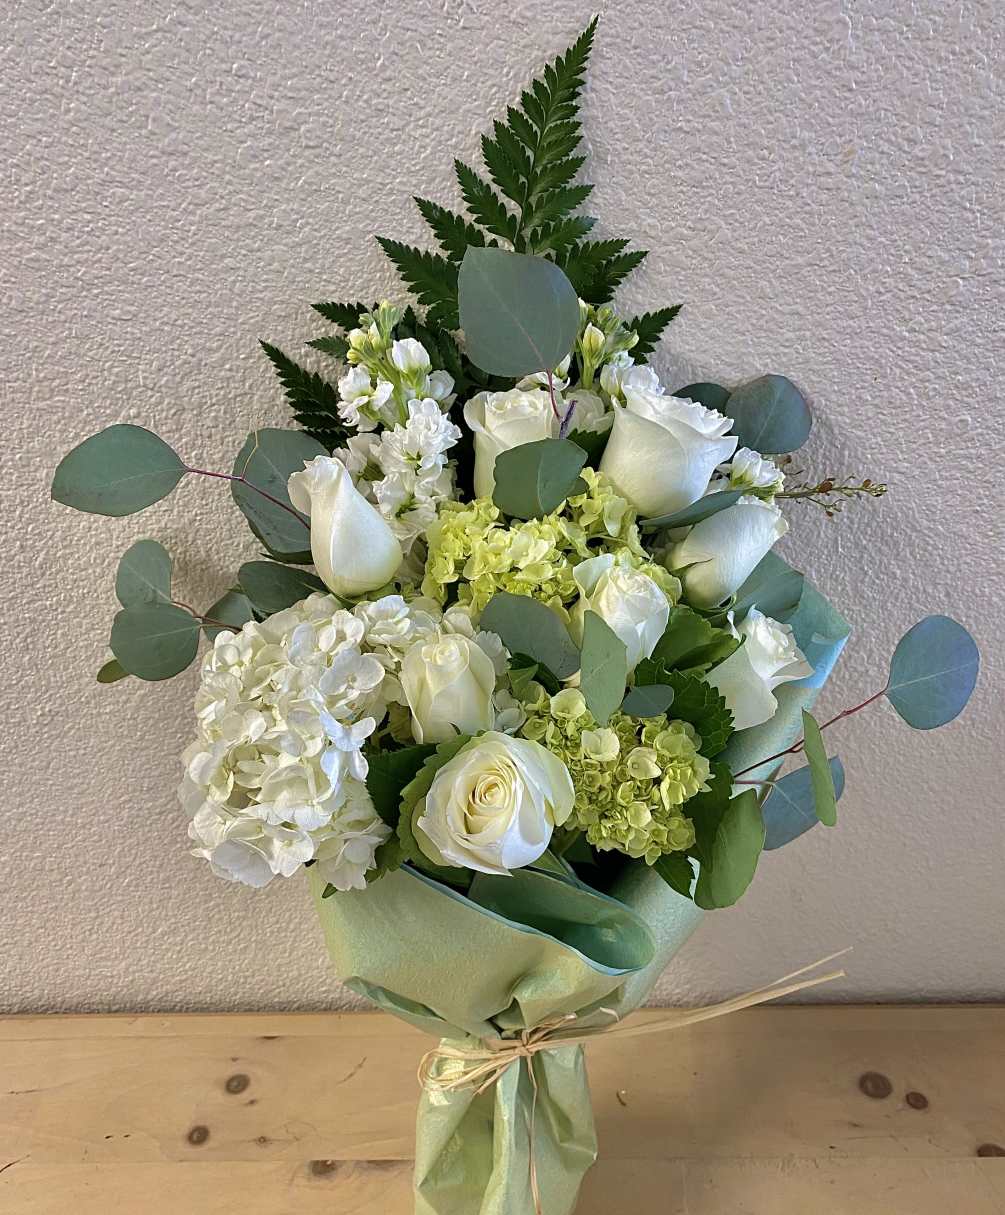 White roses, green hydrangeas, white hydrangeas, white snapdragons, silver dollar, fern, wrapped